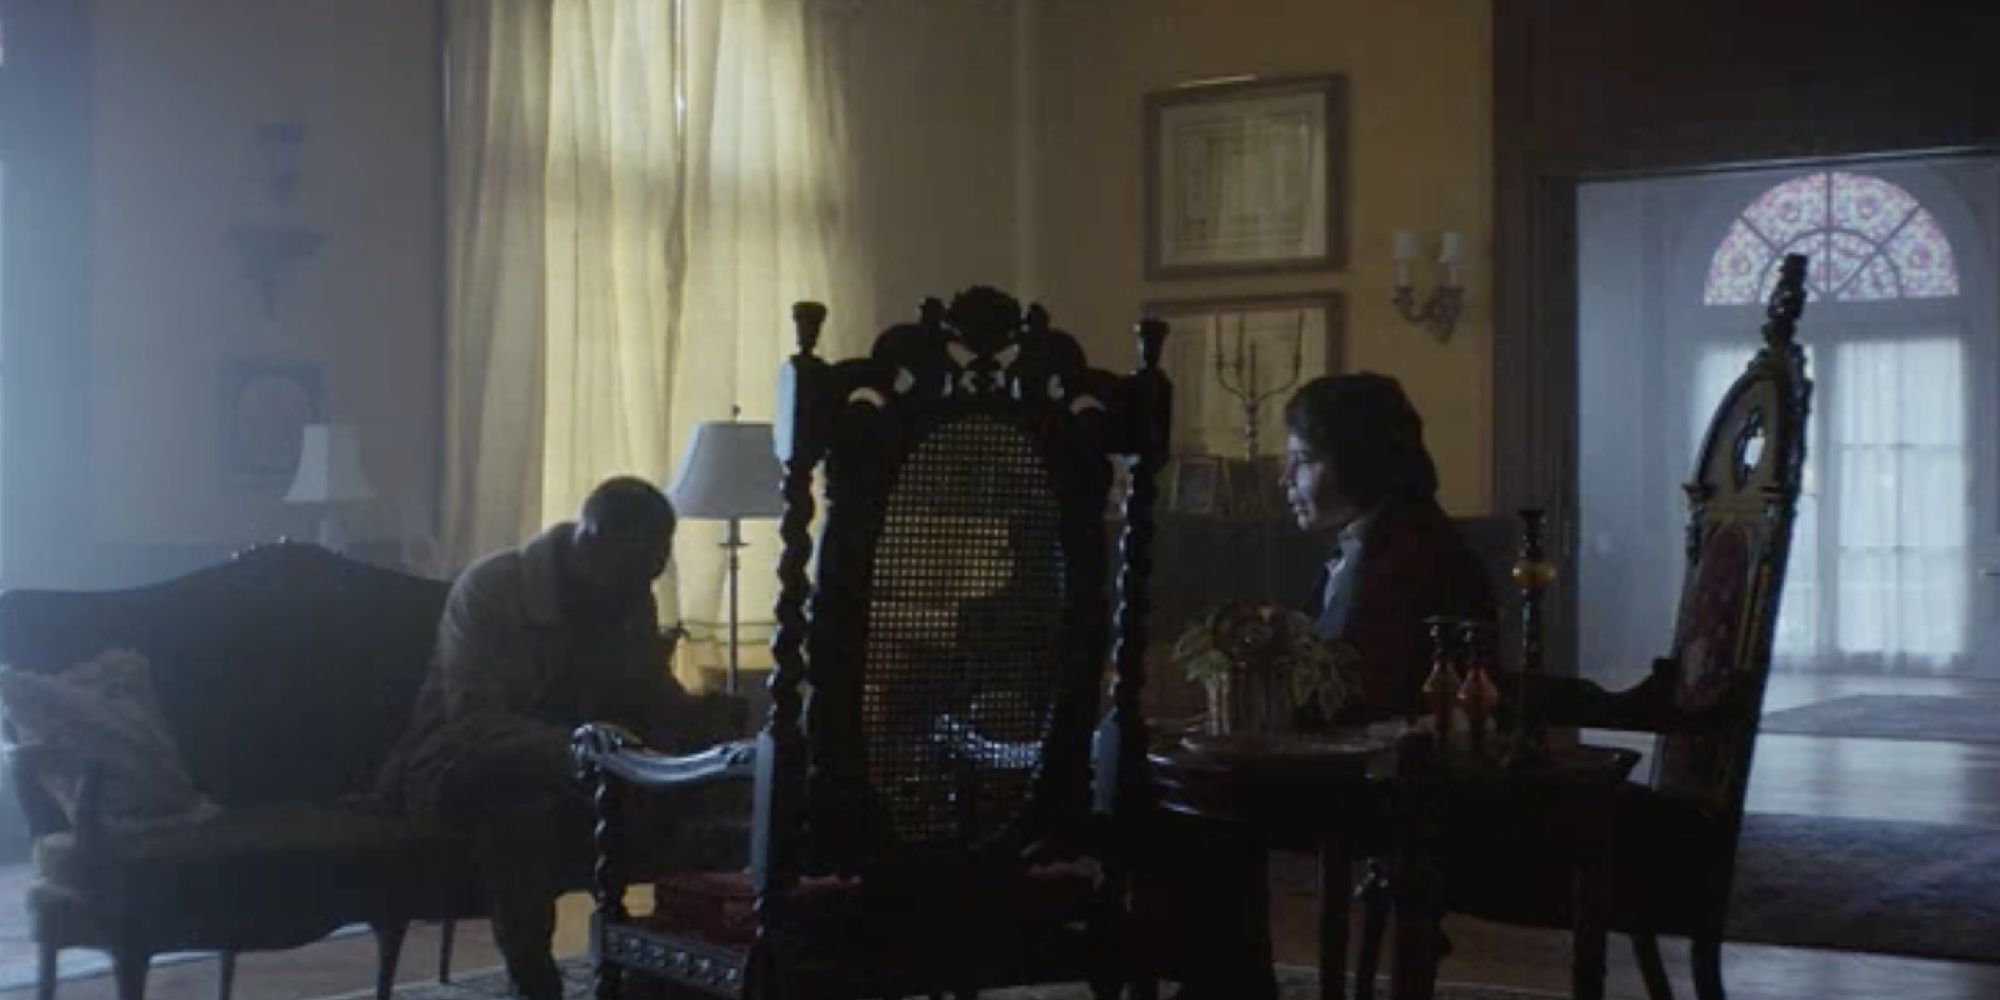 Atlanta Darius sitting across from Teddy Perkins in the dark mansion